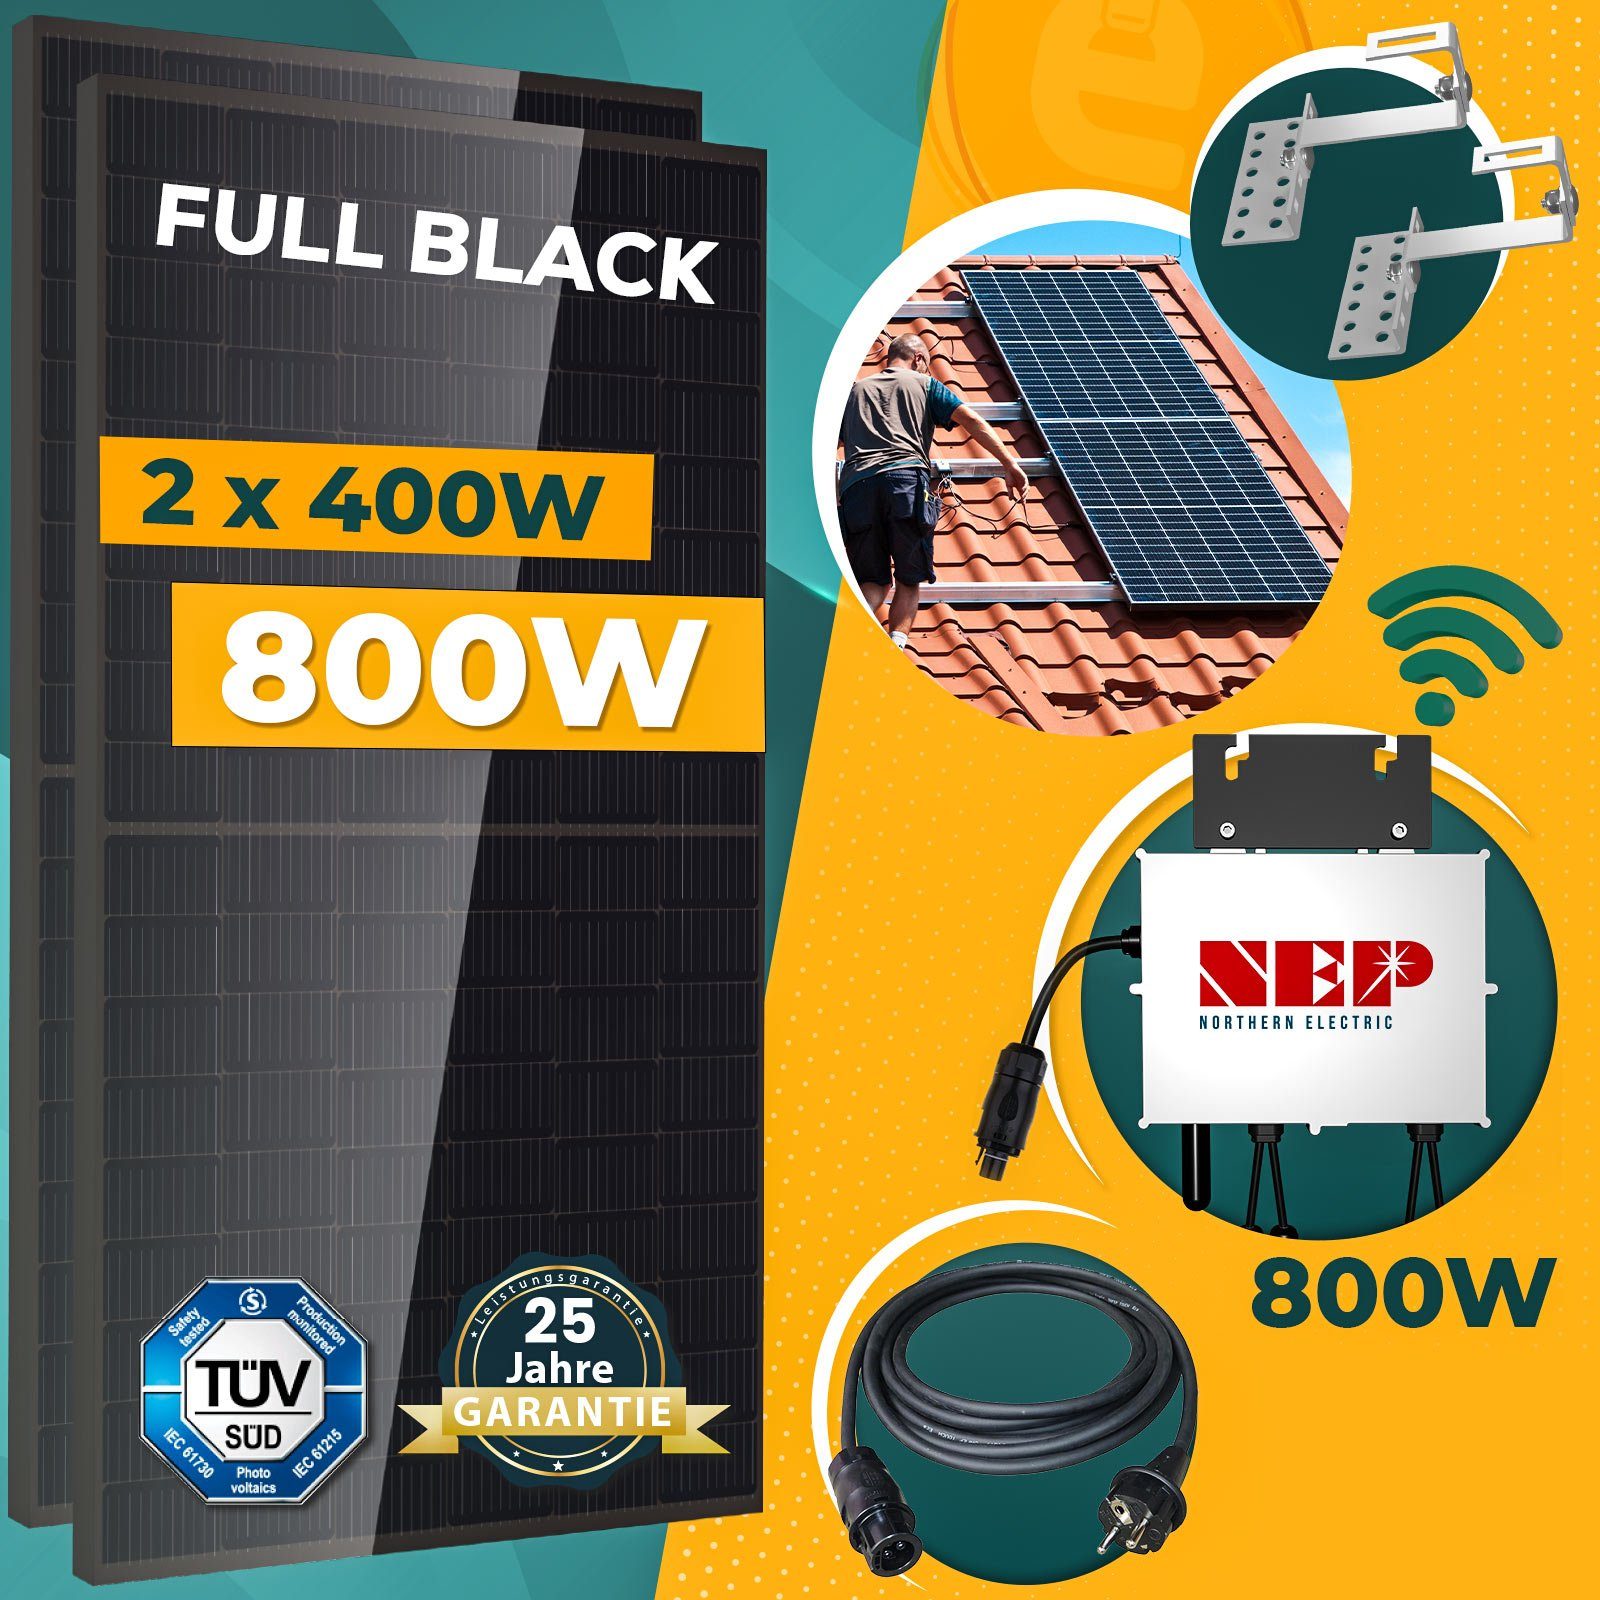 430W Bifazial Glas-Glas Full-Black Solarmodul mit HMS-400W-1T Wechselrichter  - SOLAR-HOOK etm GmbH